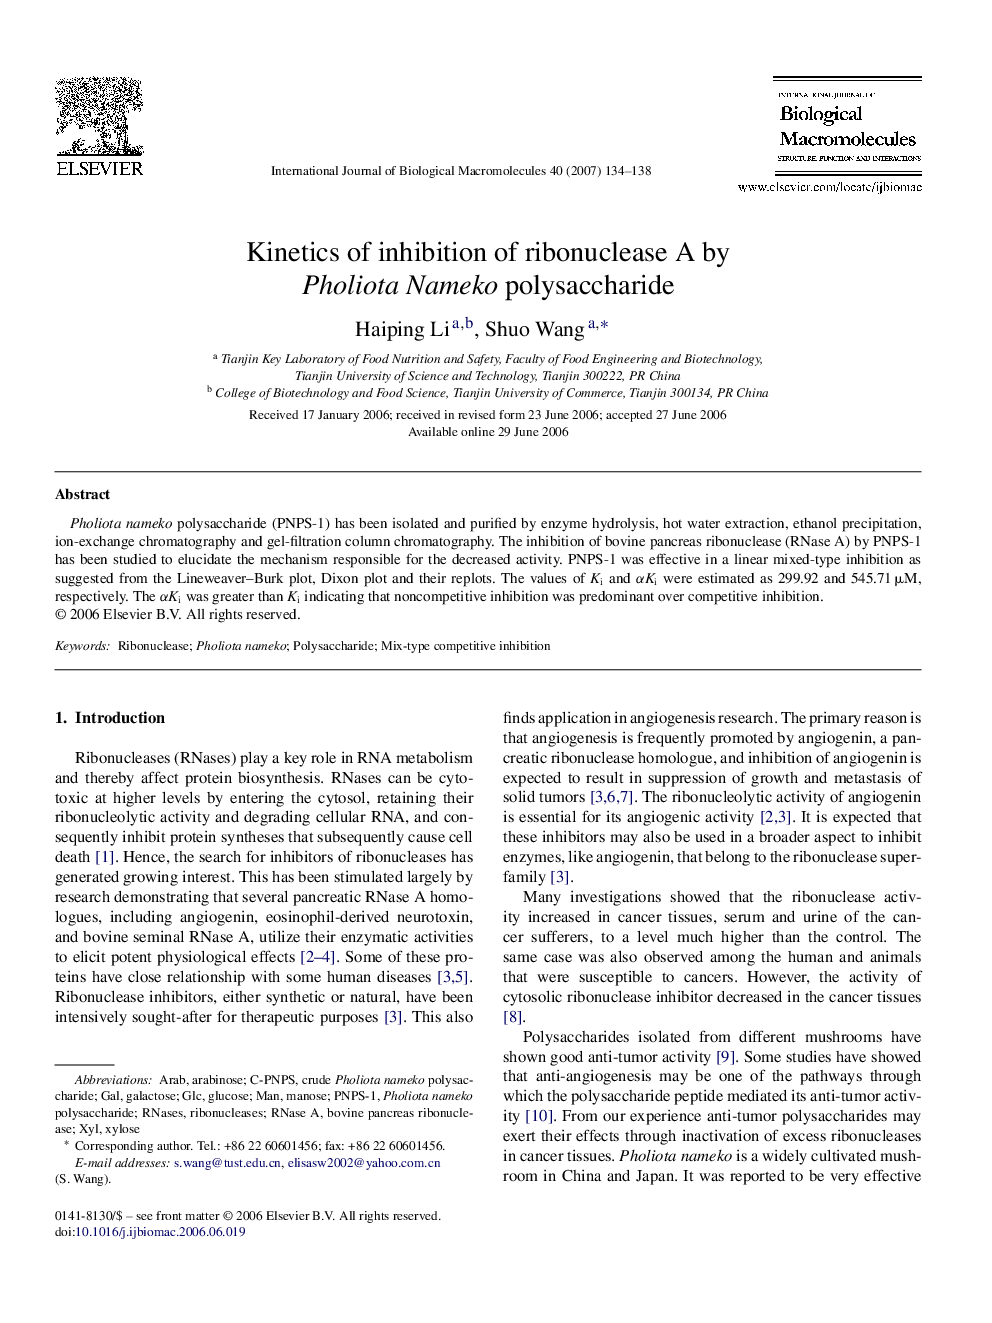 Kinetics of inhibition of ribonuclease A by Pholiota Nameko polysaccharide